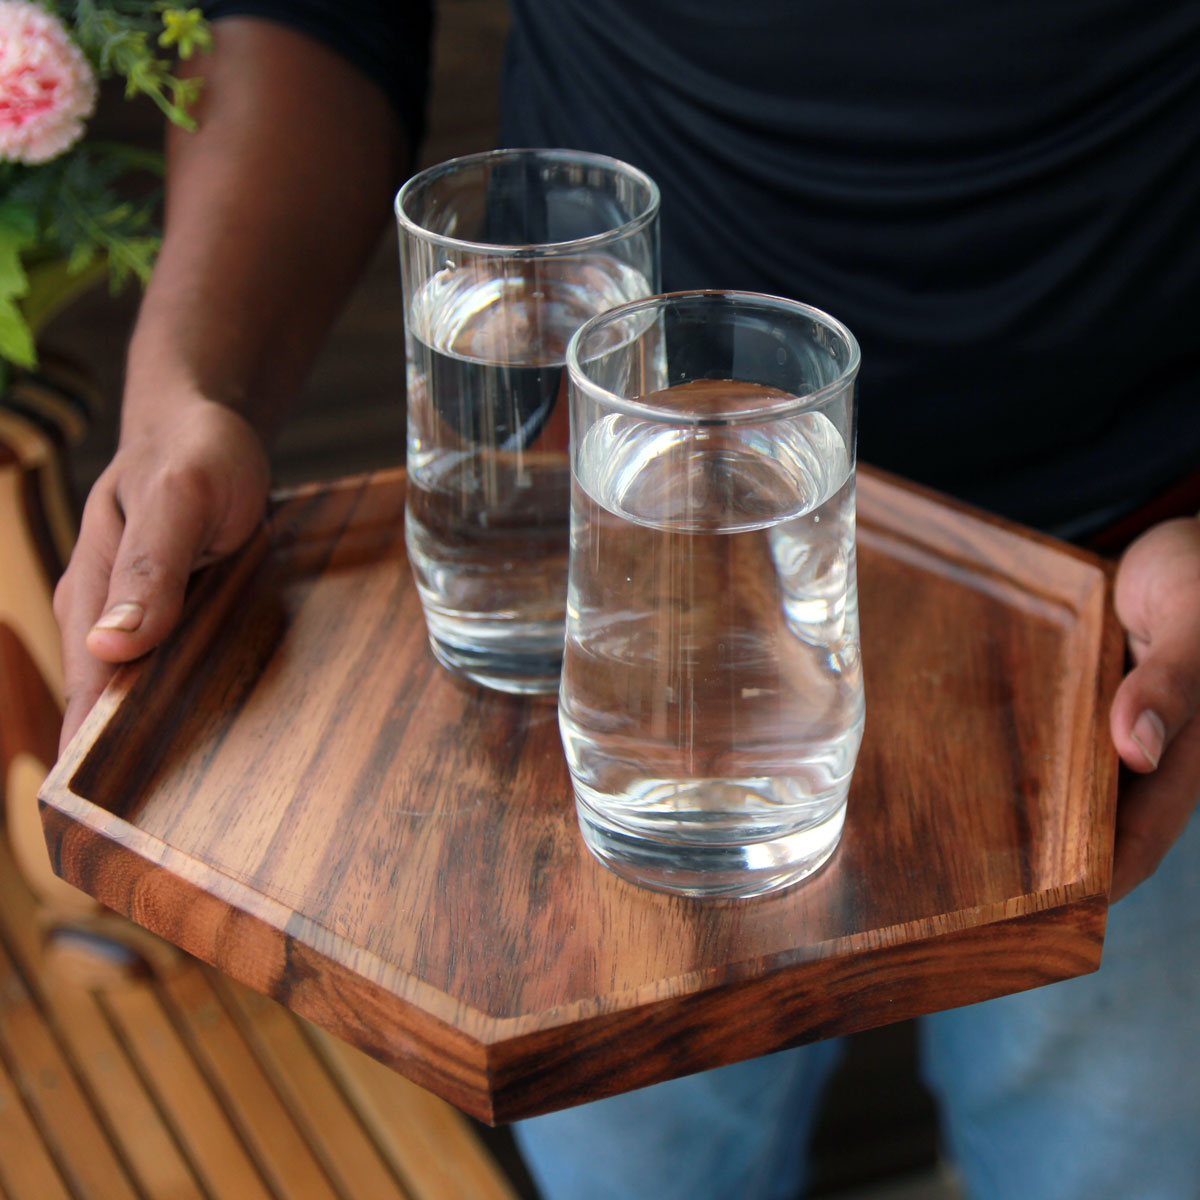 Rectangular Wooden Serving Tray  Minimalist Wood Decorative Tray